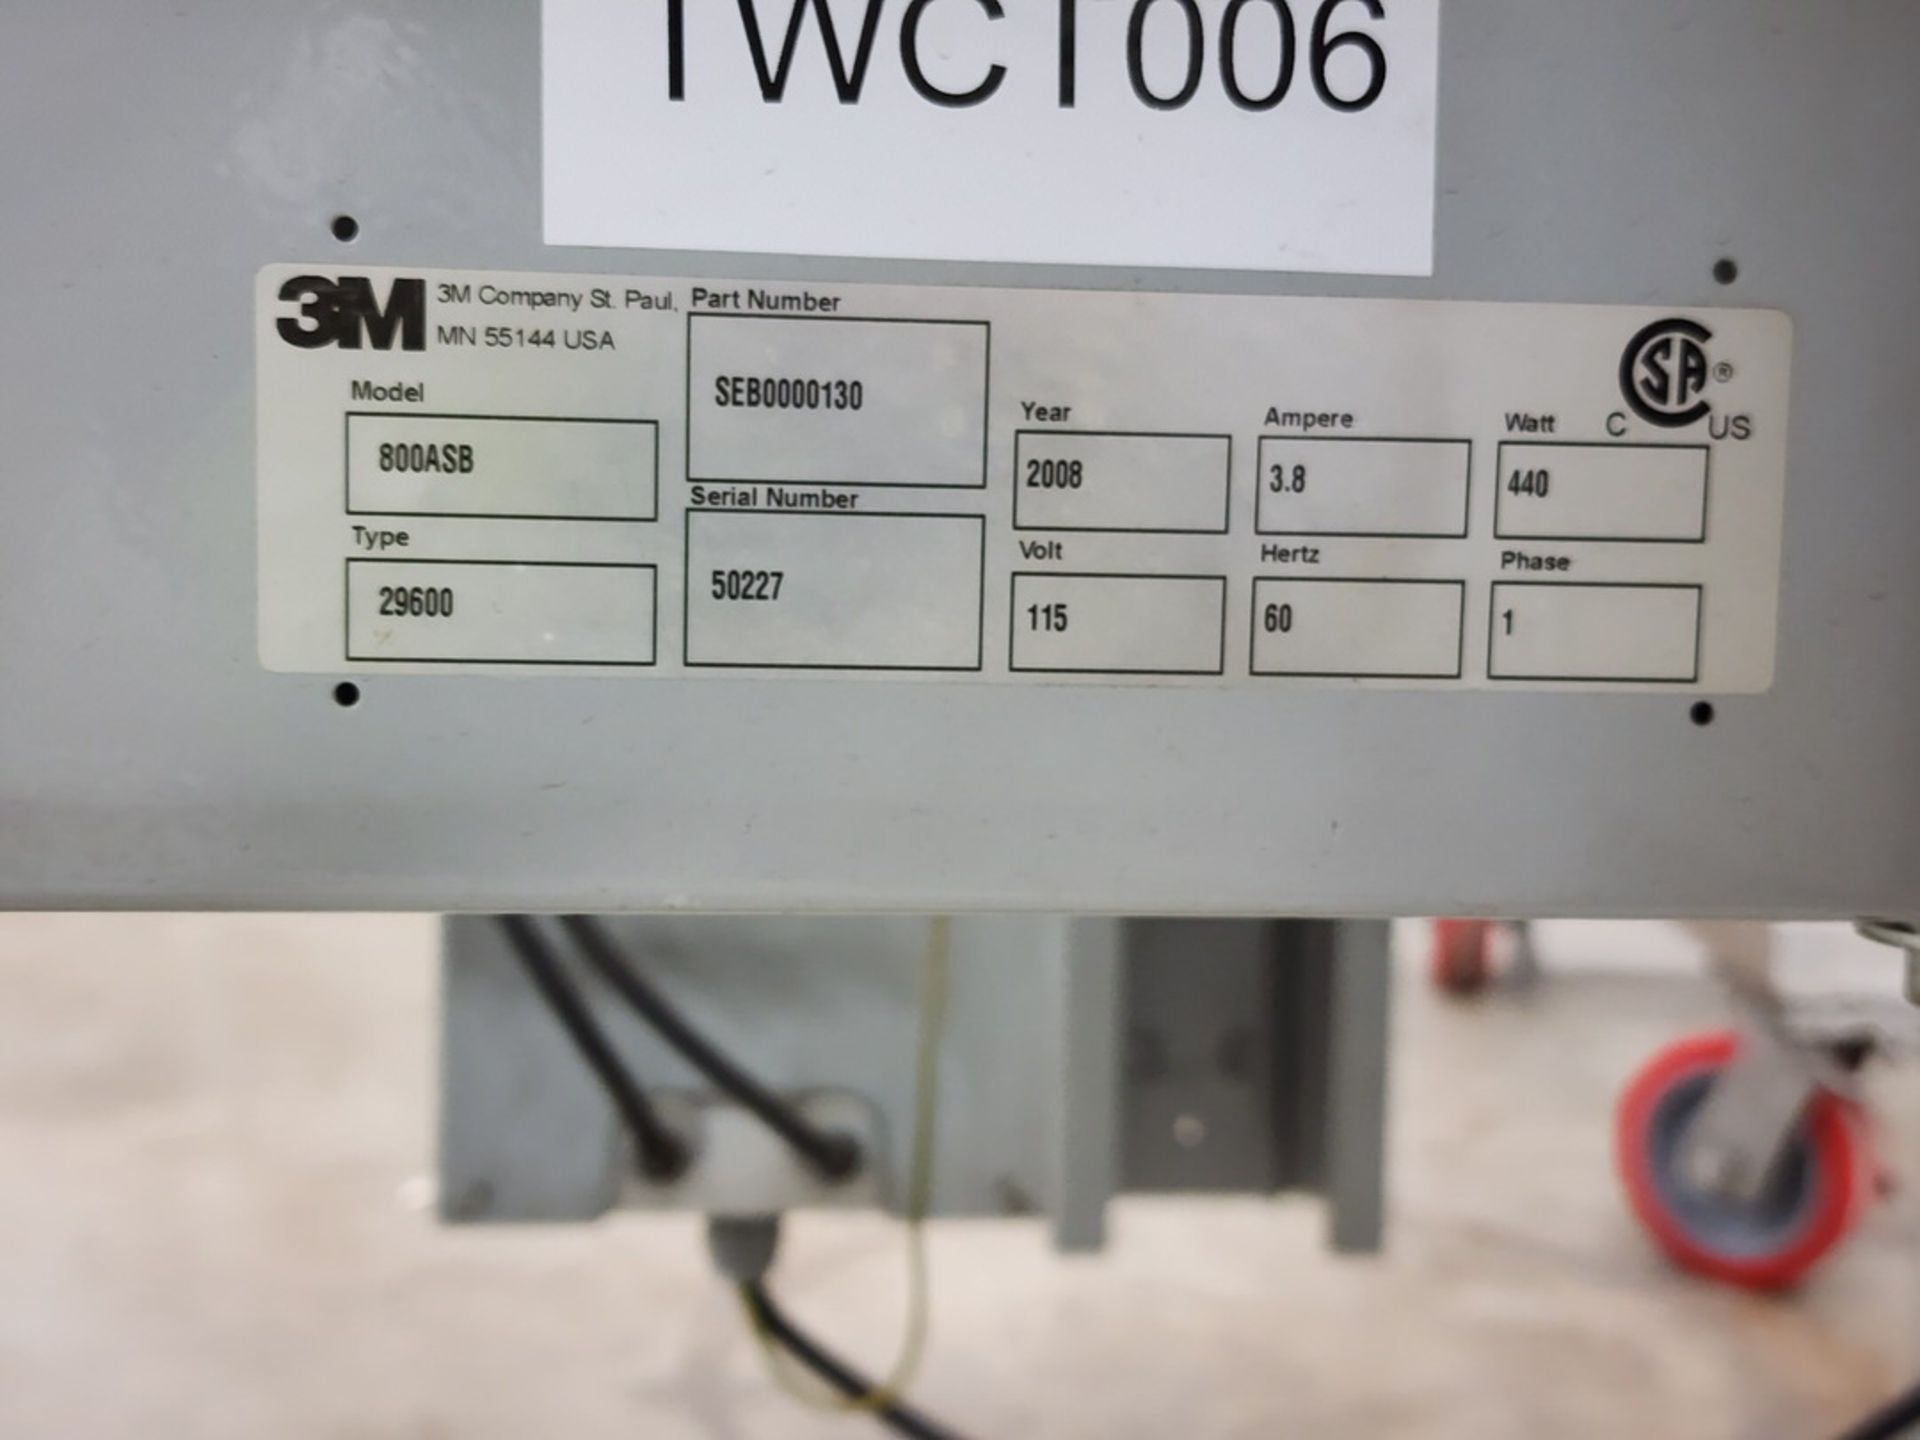 3M 800ASB Case Sealing System Machine 115V, 60HZ, 1PH, 440W, 3.8A - Image 10 of 10